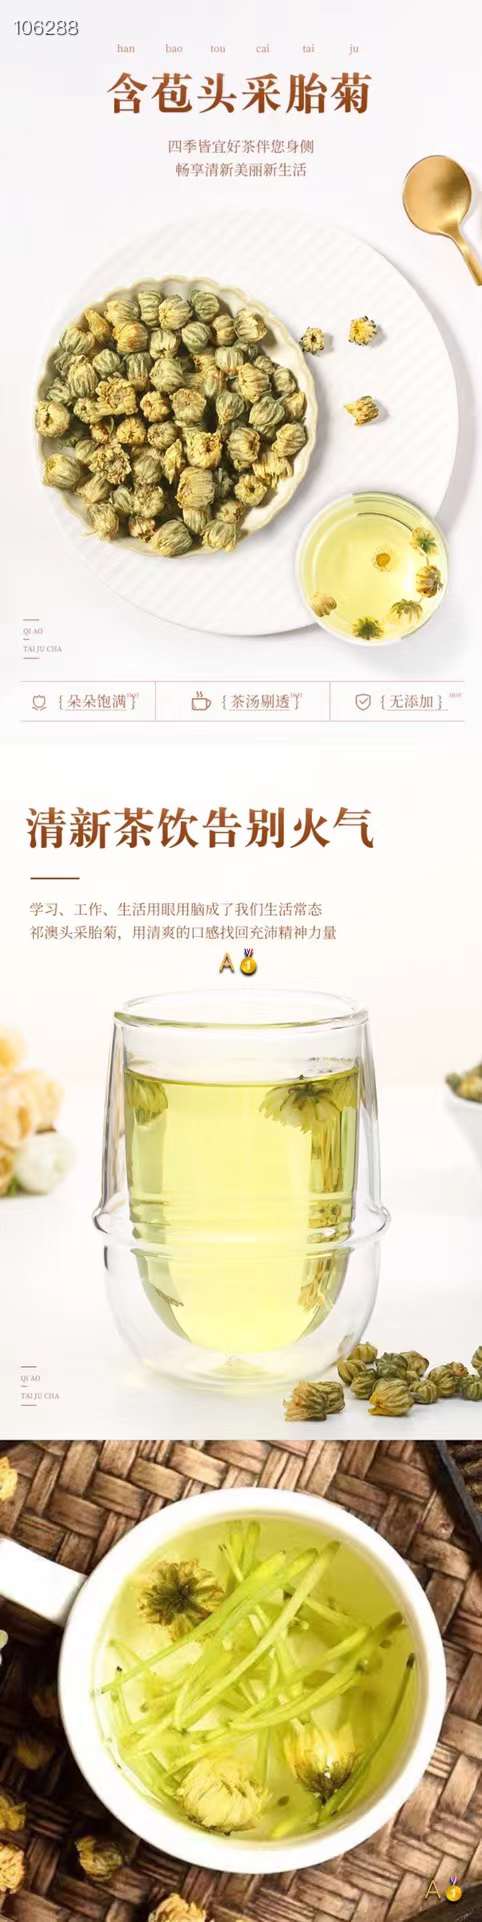 Health tea/scented tea